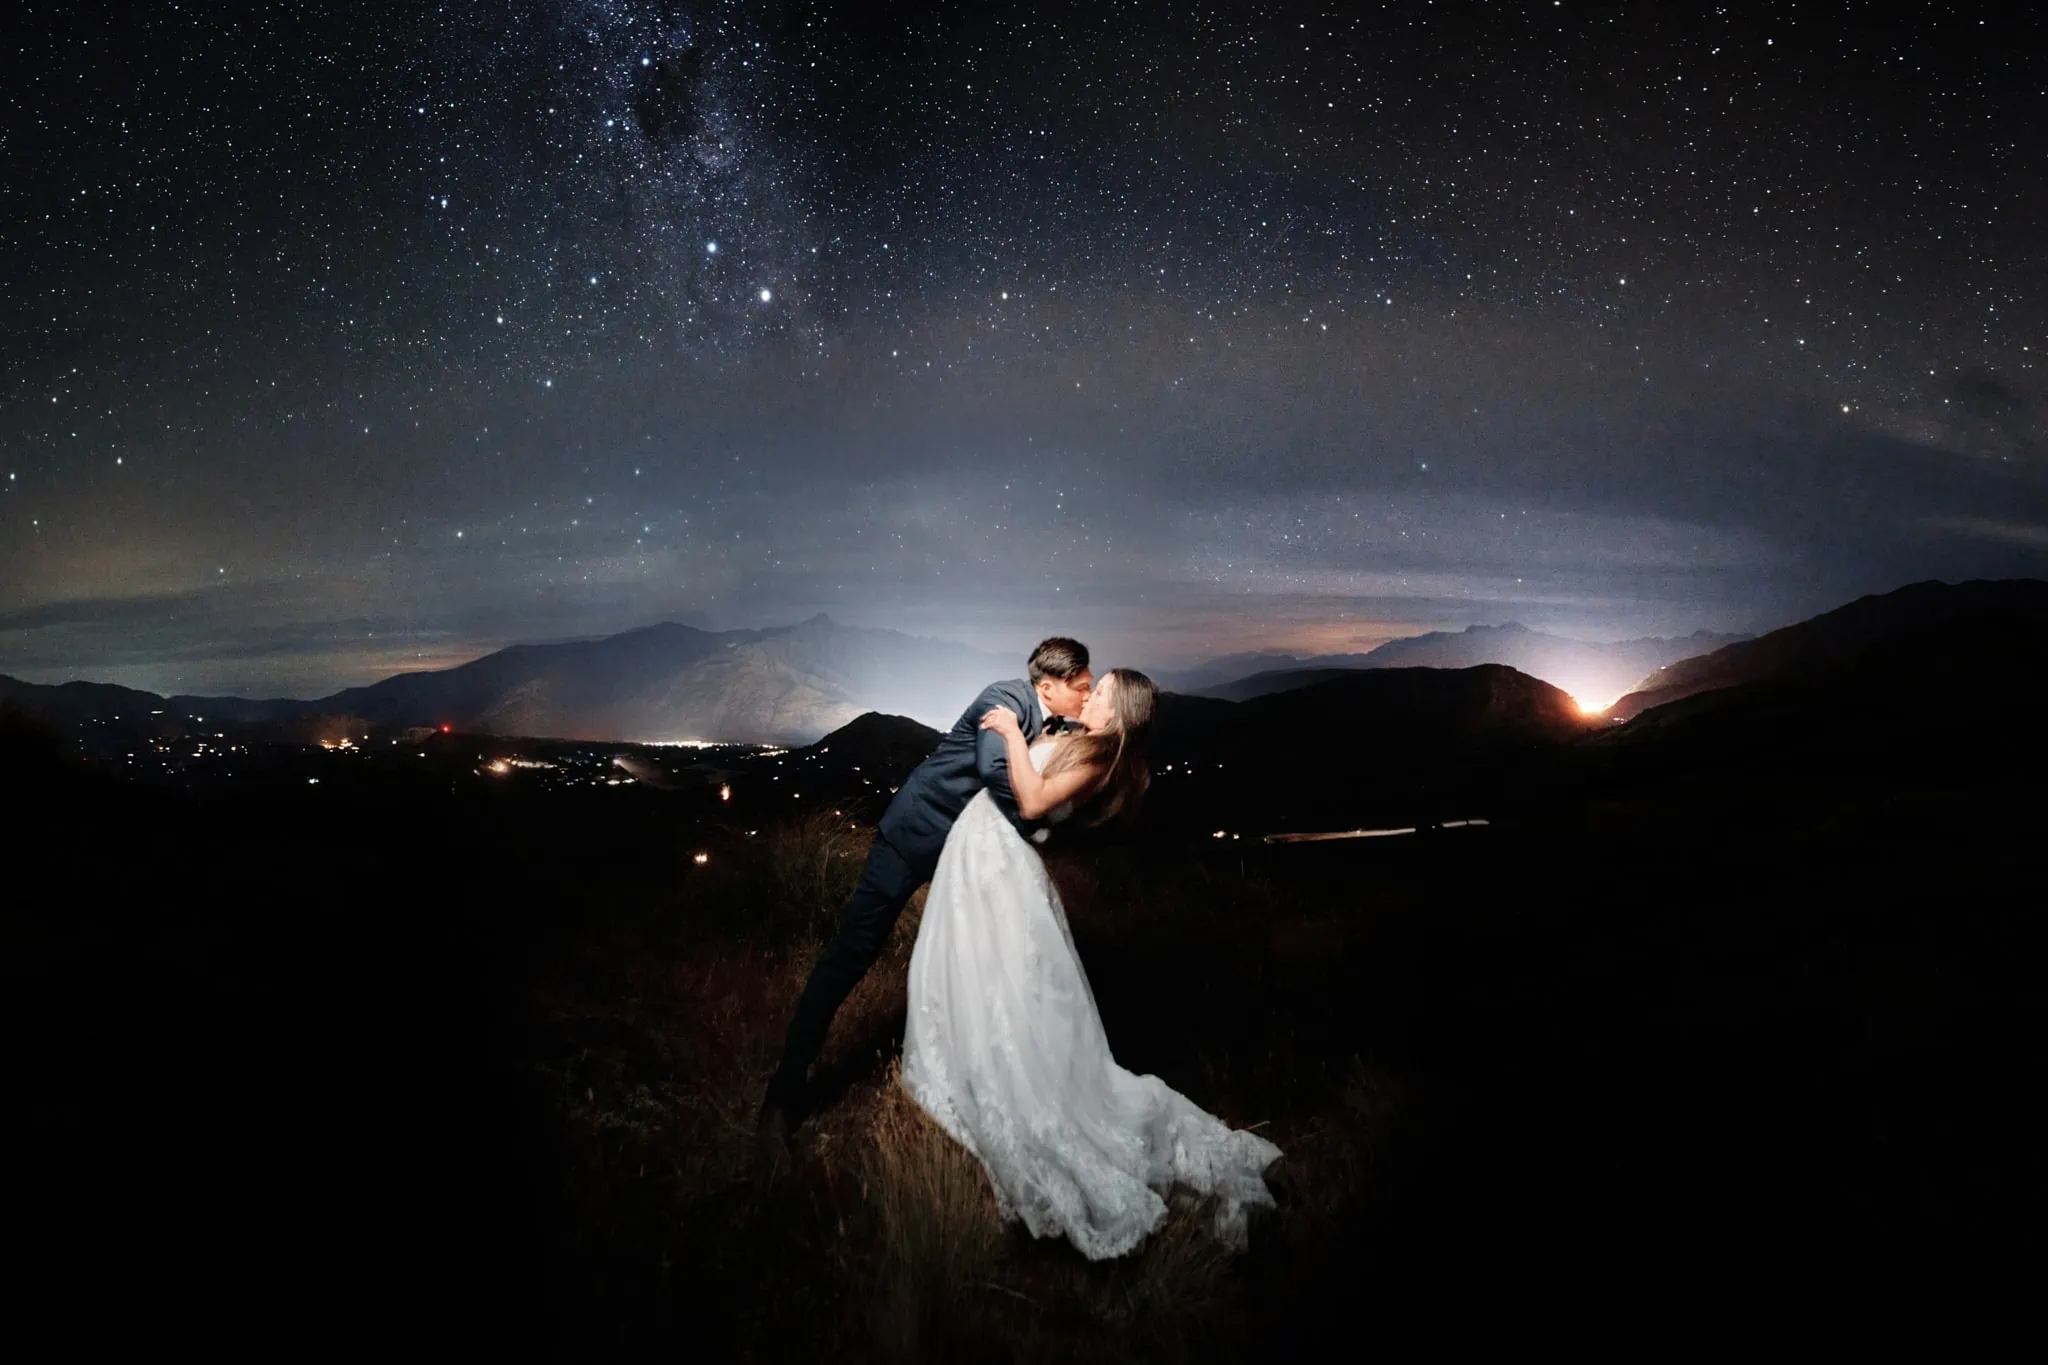 Queenstown New Zealand Elopement Wedding Photographer - A bride and groom kiss under the starry night.